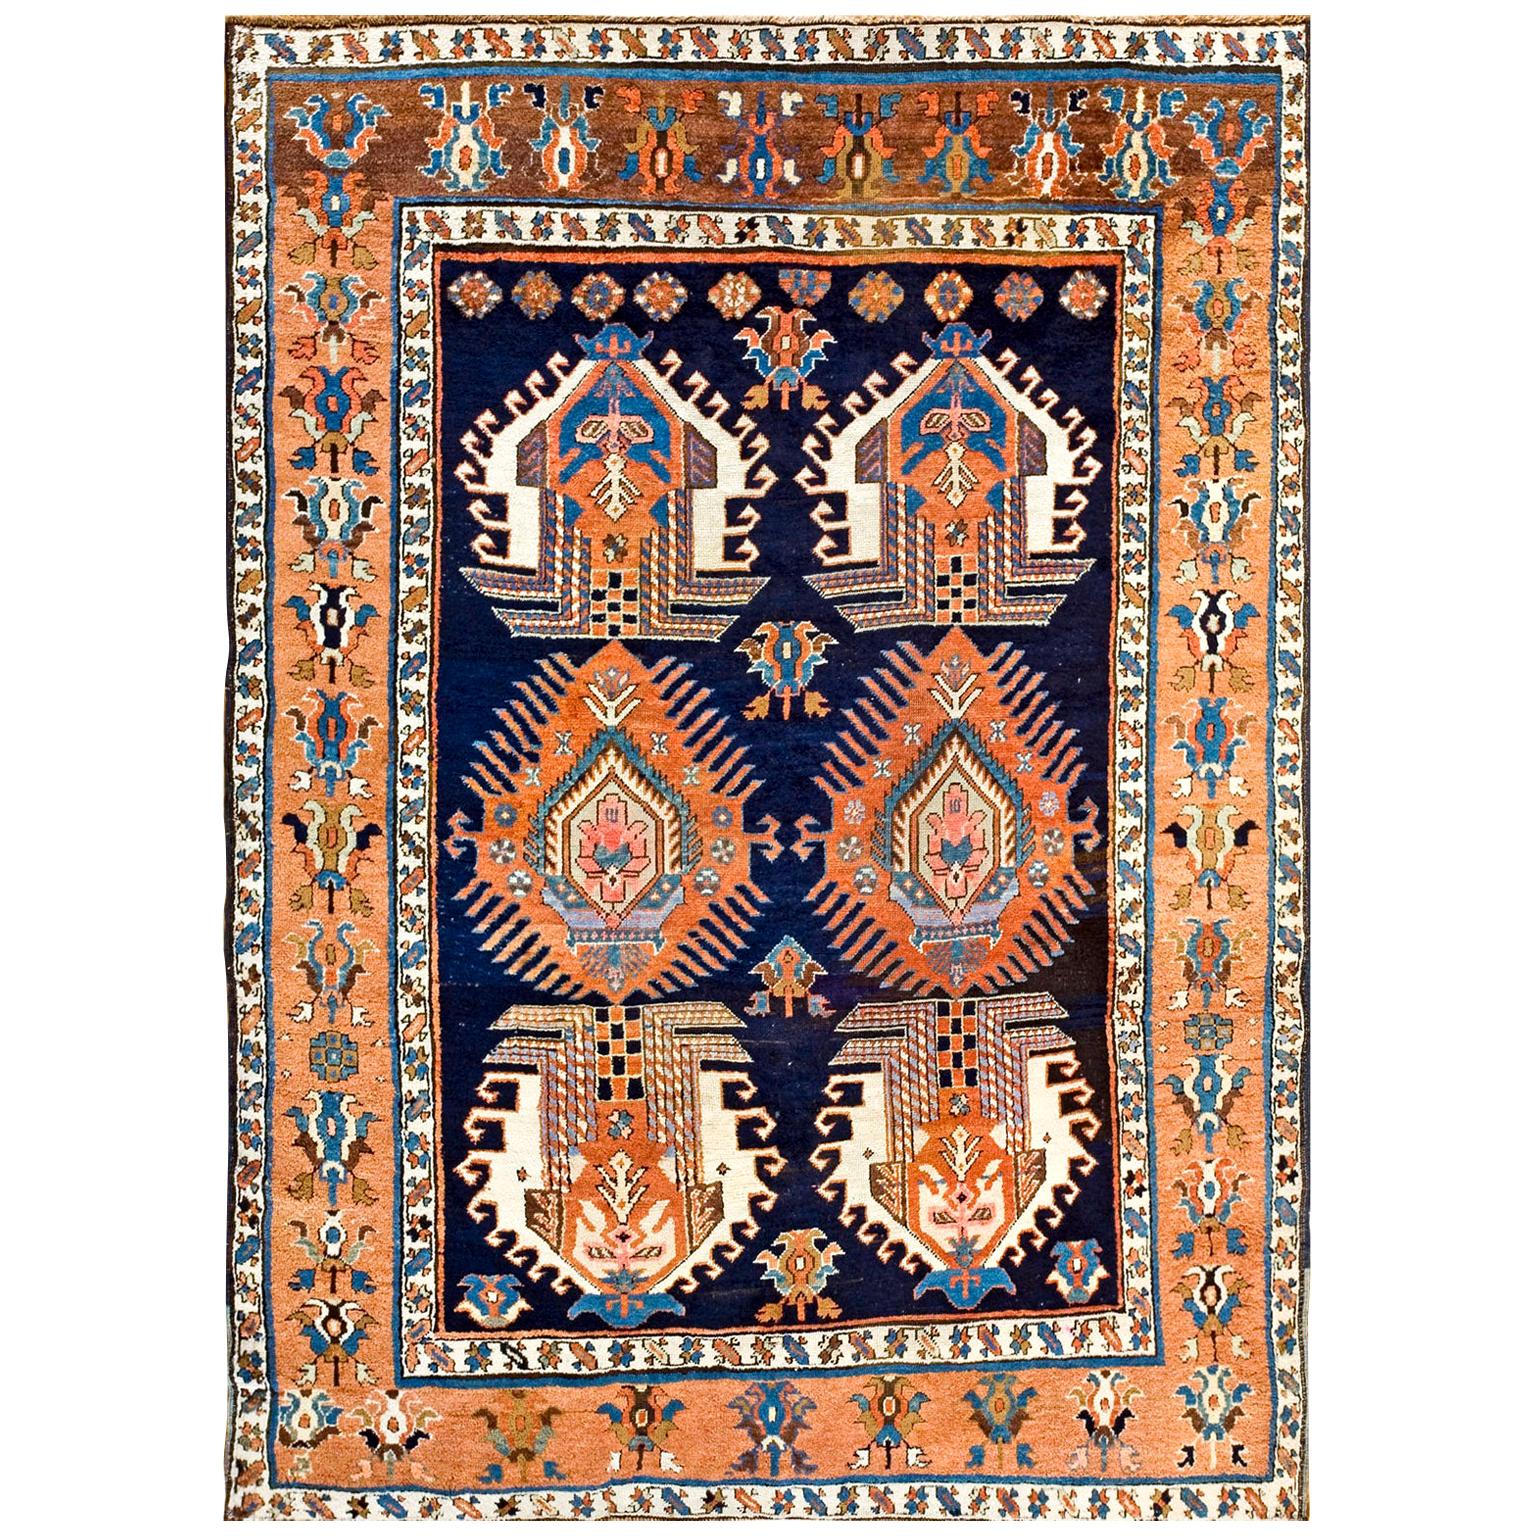 Late 19th Century NW Persian Shahsavan Carpet ( 5' x 6'10" - 253 x 208 cm ) For Sale